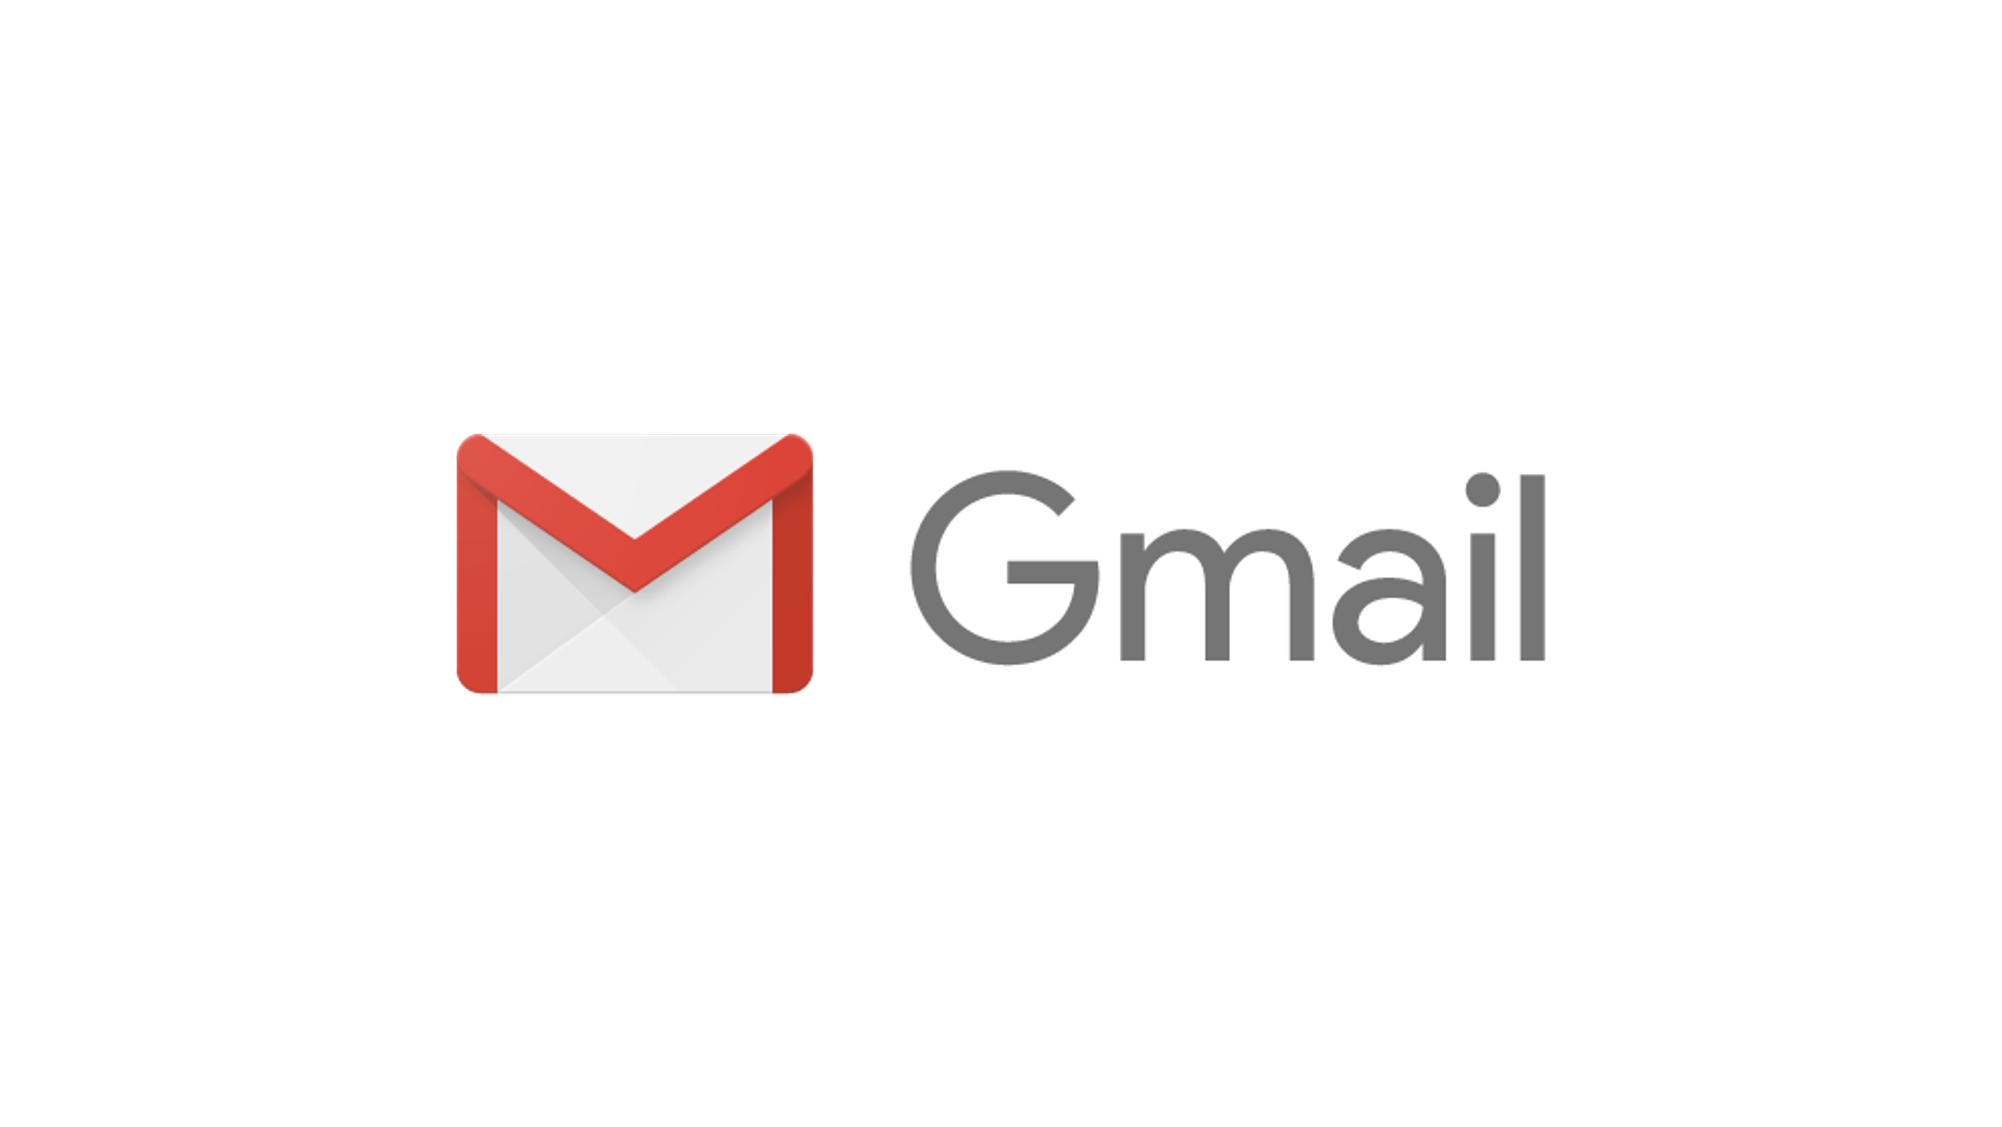 Gmail картинка. Gmail почта. Логотип гмаил. Значок гугл почты. Ecapusta com